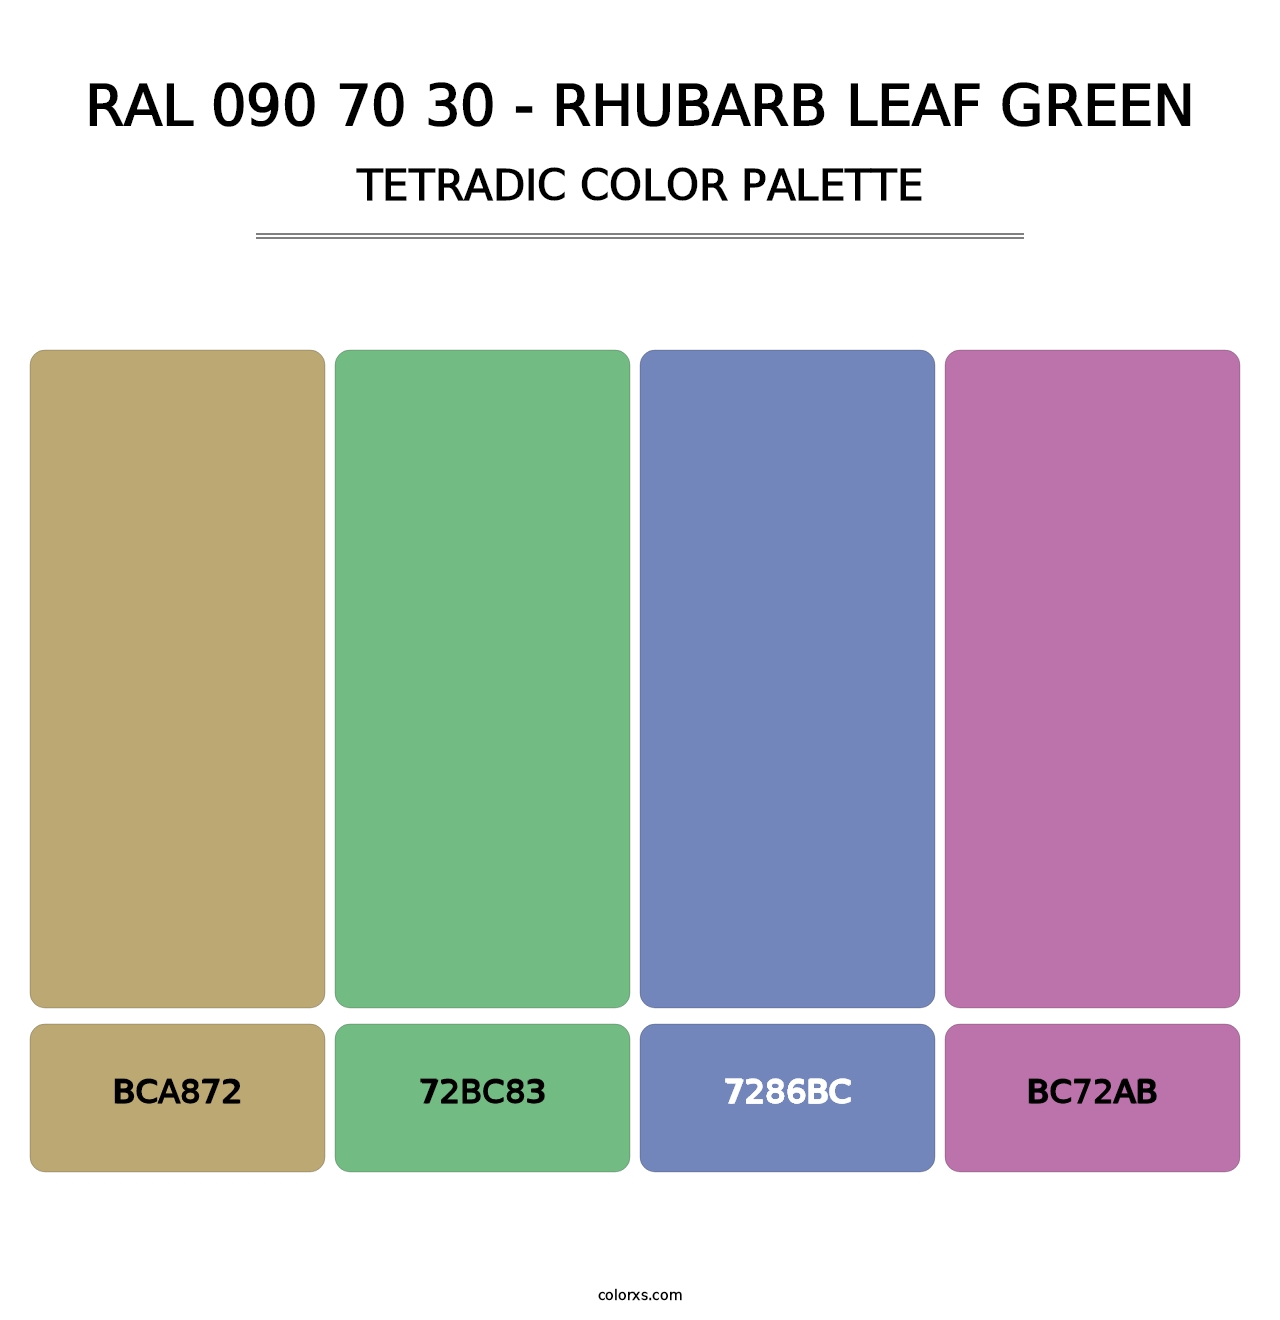 RAL 090 70 30 - Rhubarb Leaf Green - Tetradic Color Palette